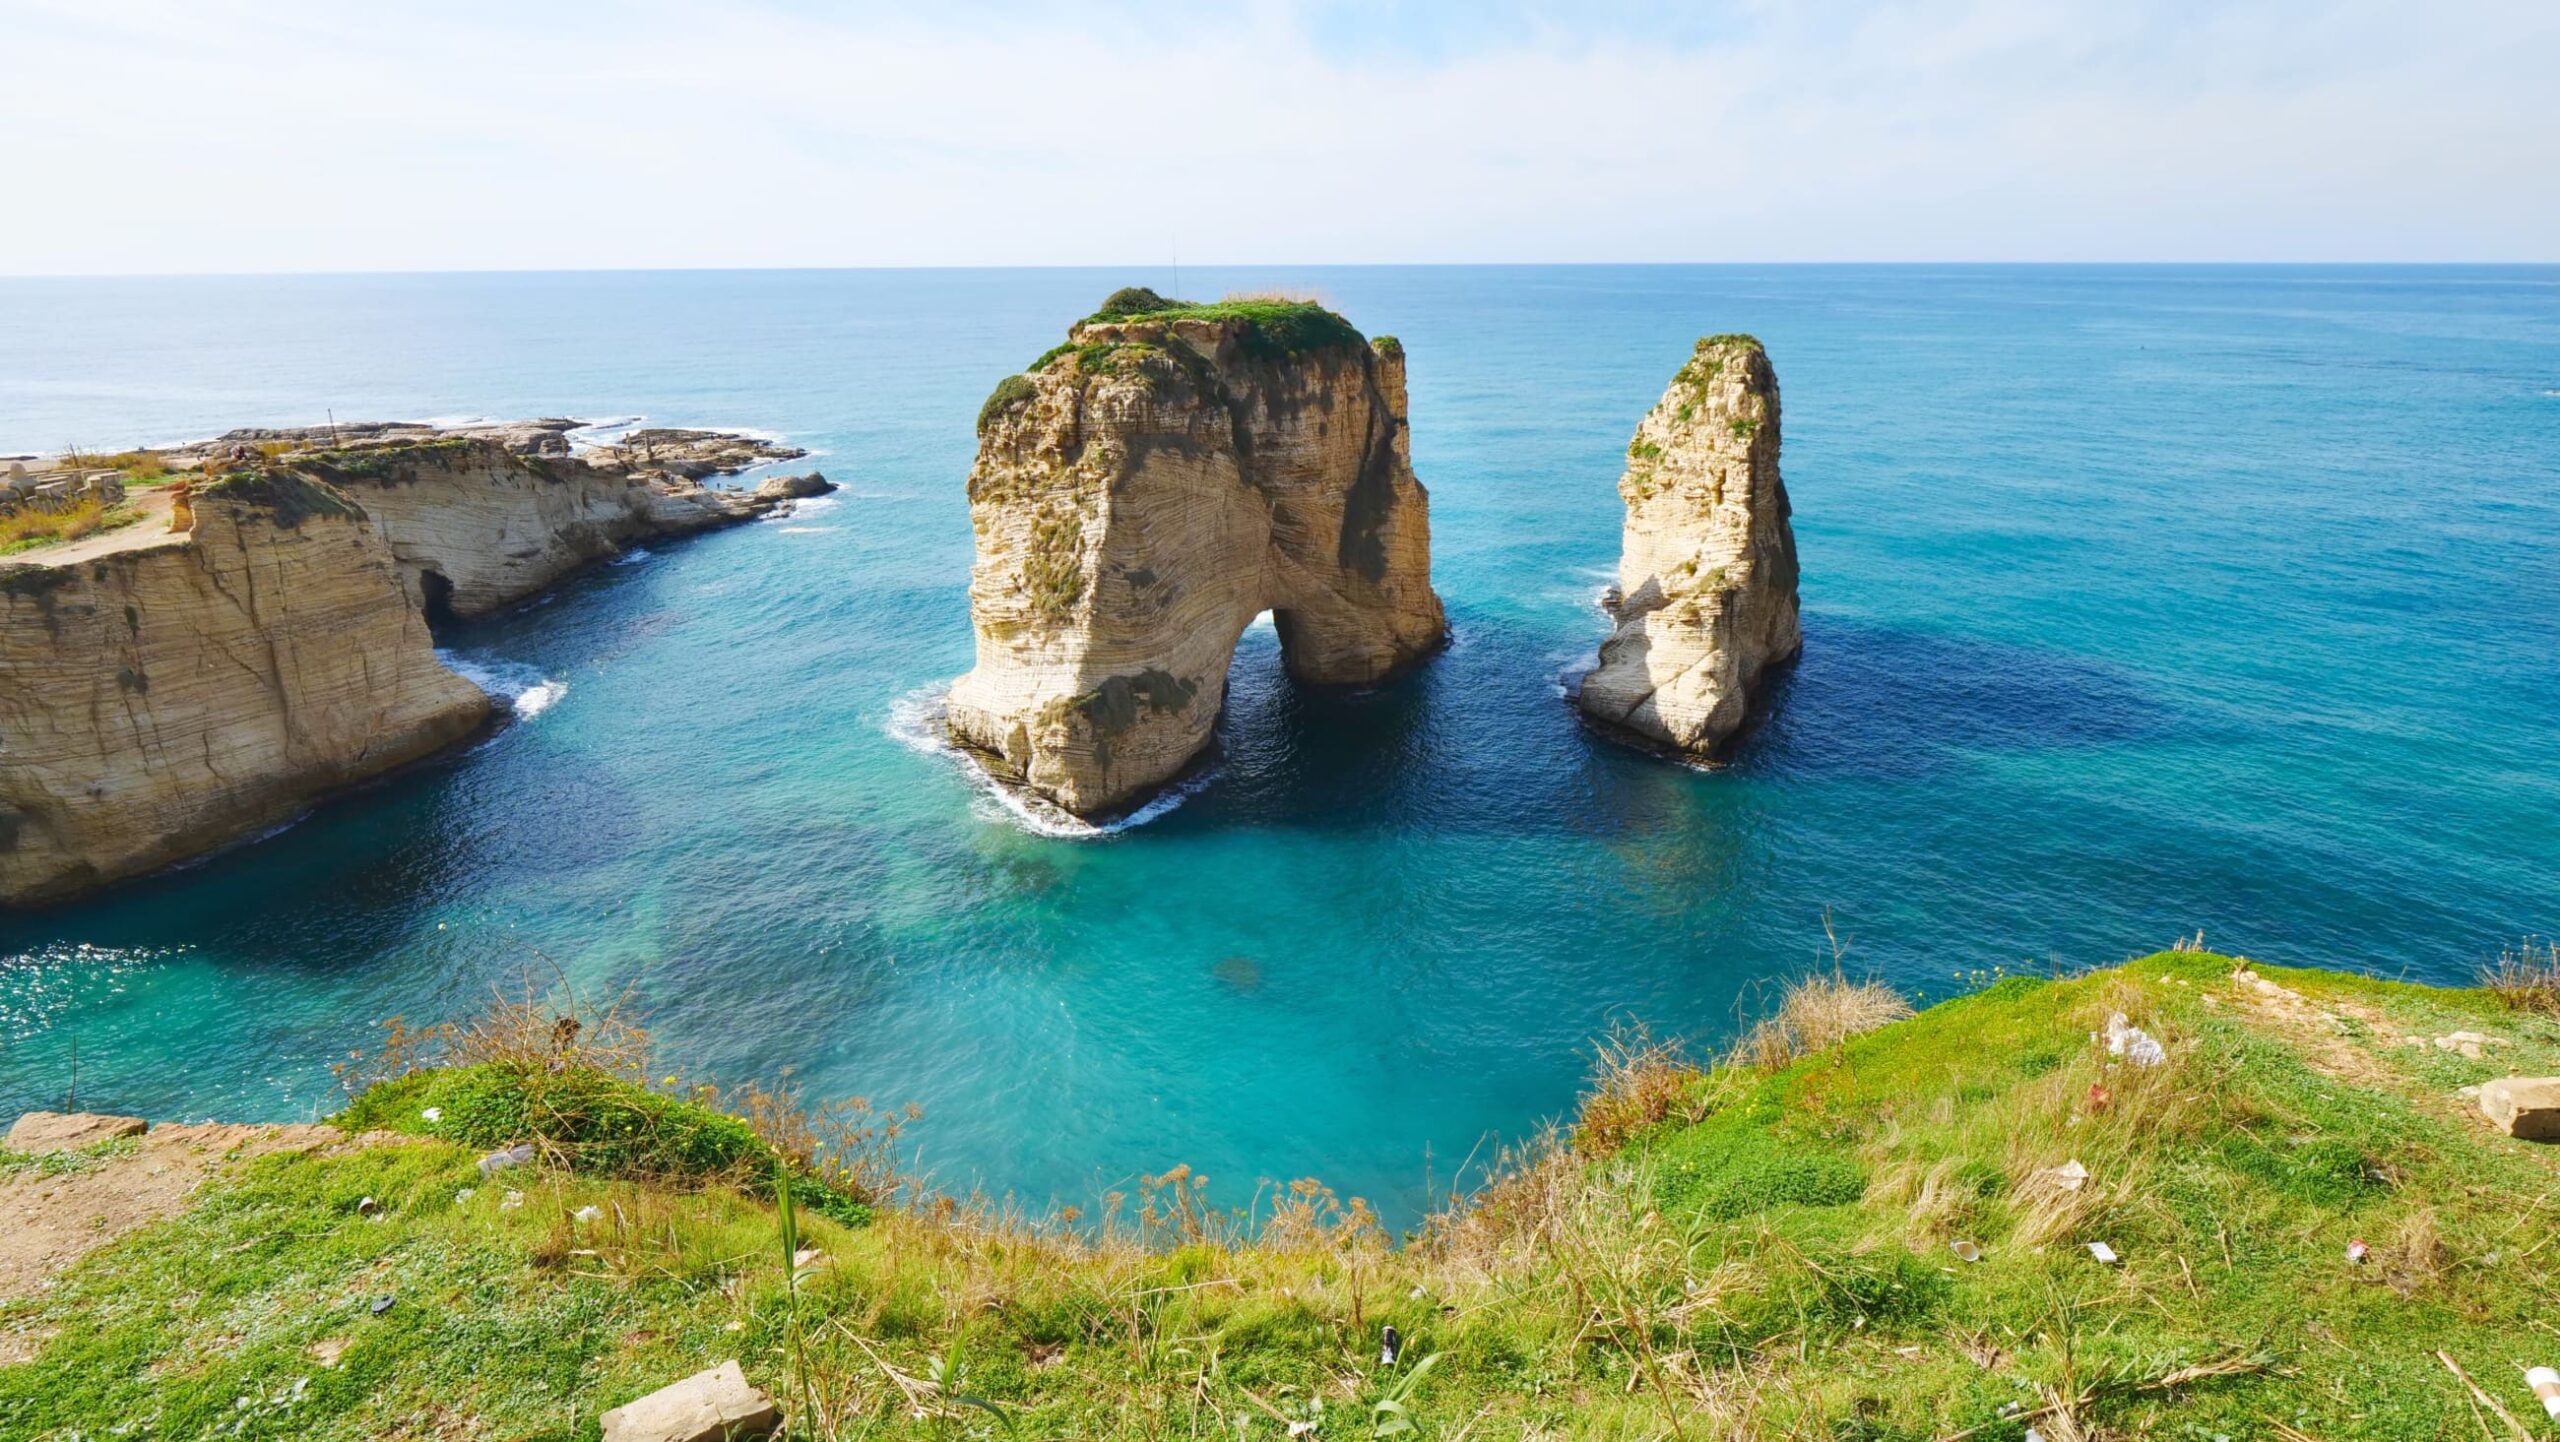 Raouche Rock off the coast of western Beirut, Lebanon